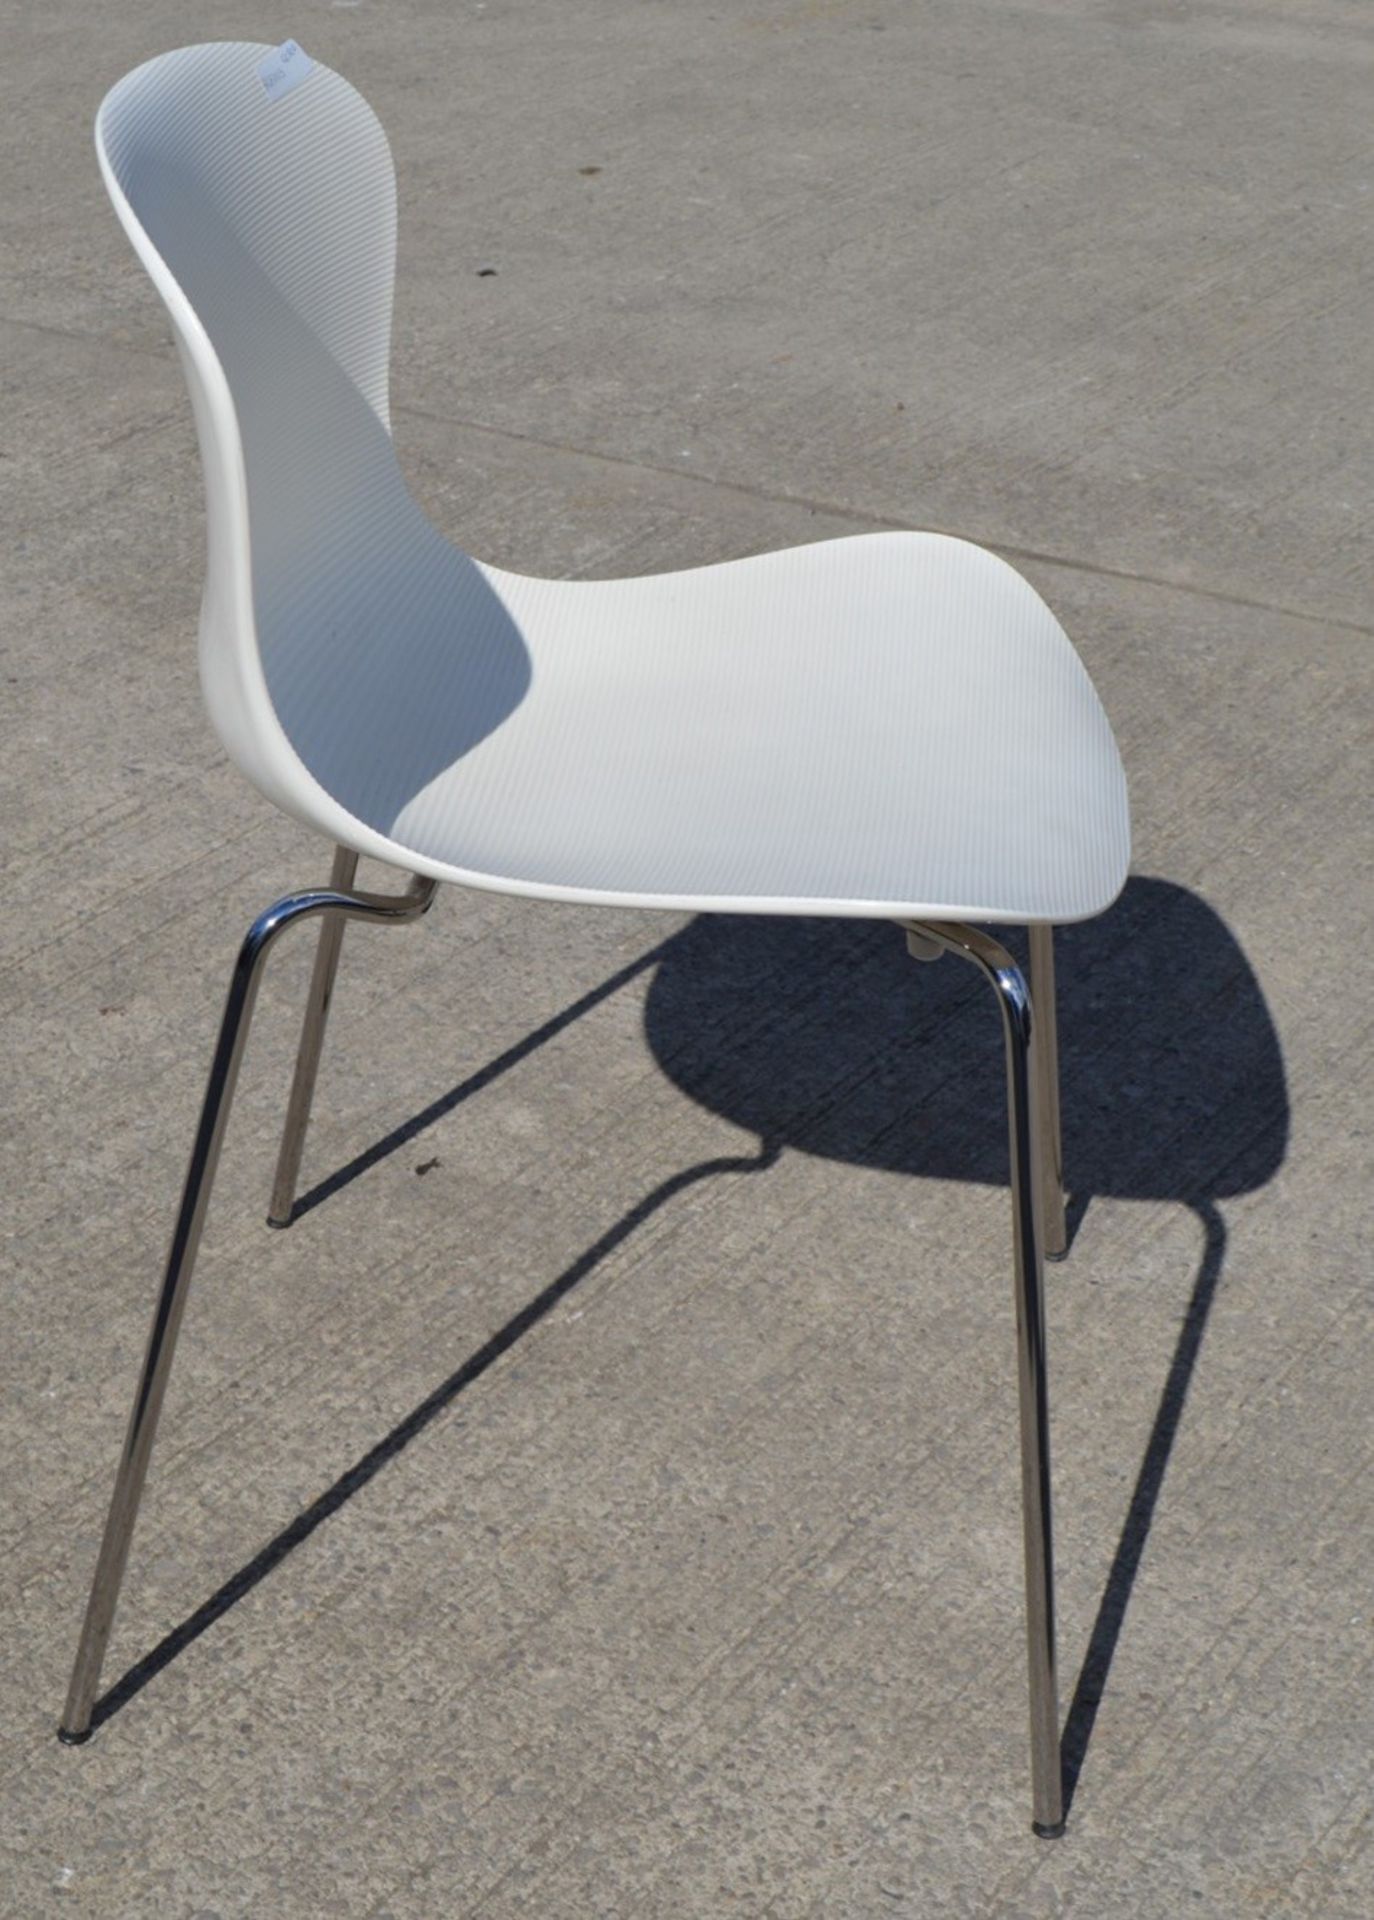 1 x Genuine Fritz Hansen 'Nap' Designer Chair In White & Chrome (KS50) - Dimensions: W48 x D40 x - Image 5 of 6